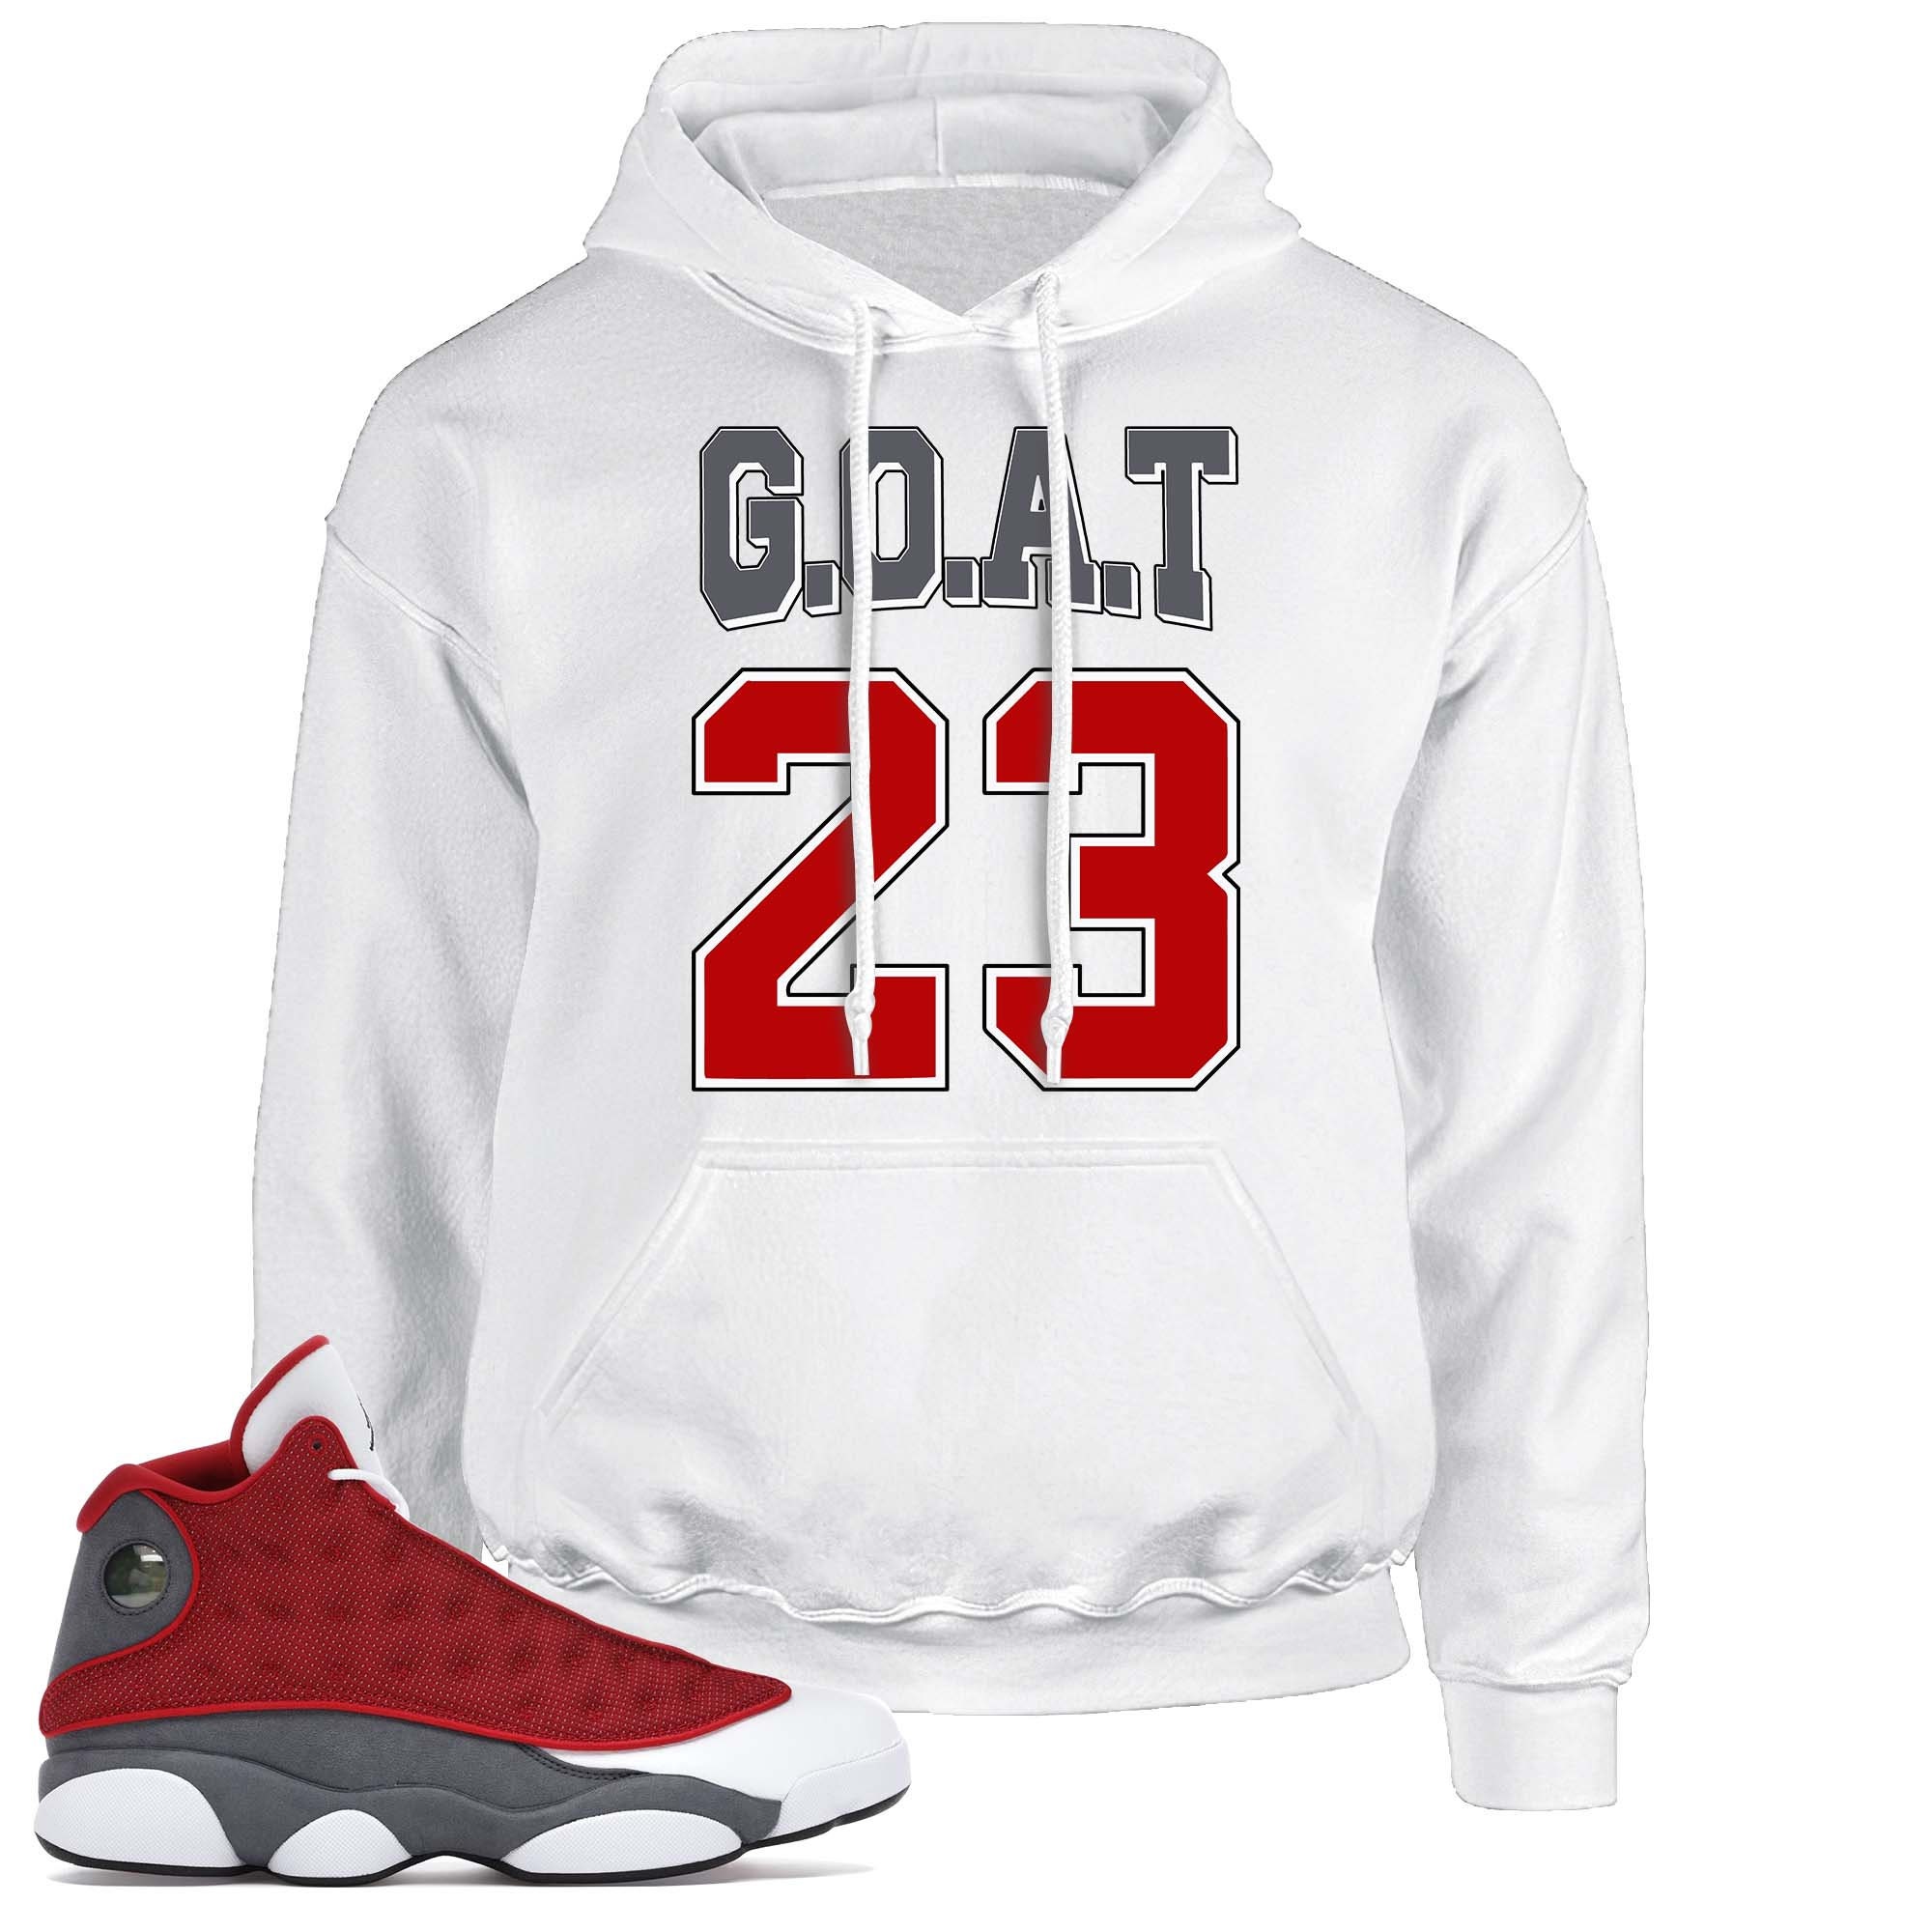 Jordan 13 Red Flint Custom Designed T shirt hoodie India